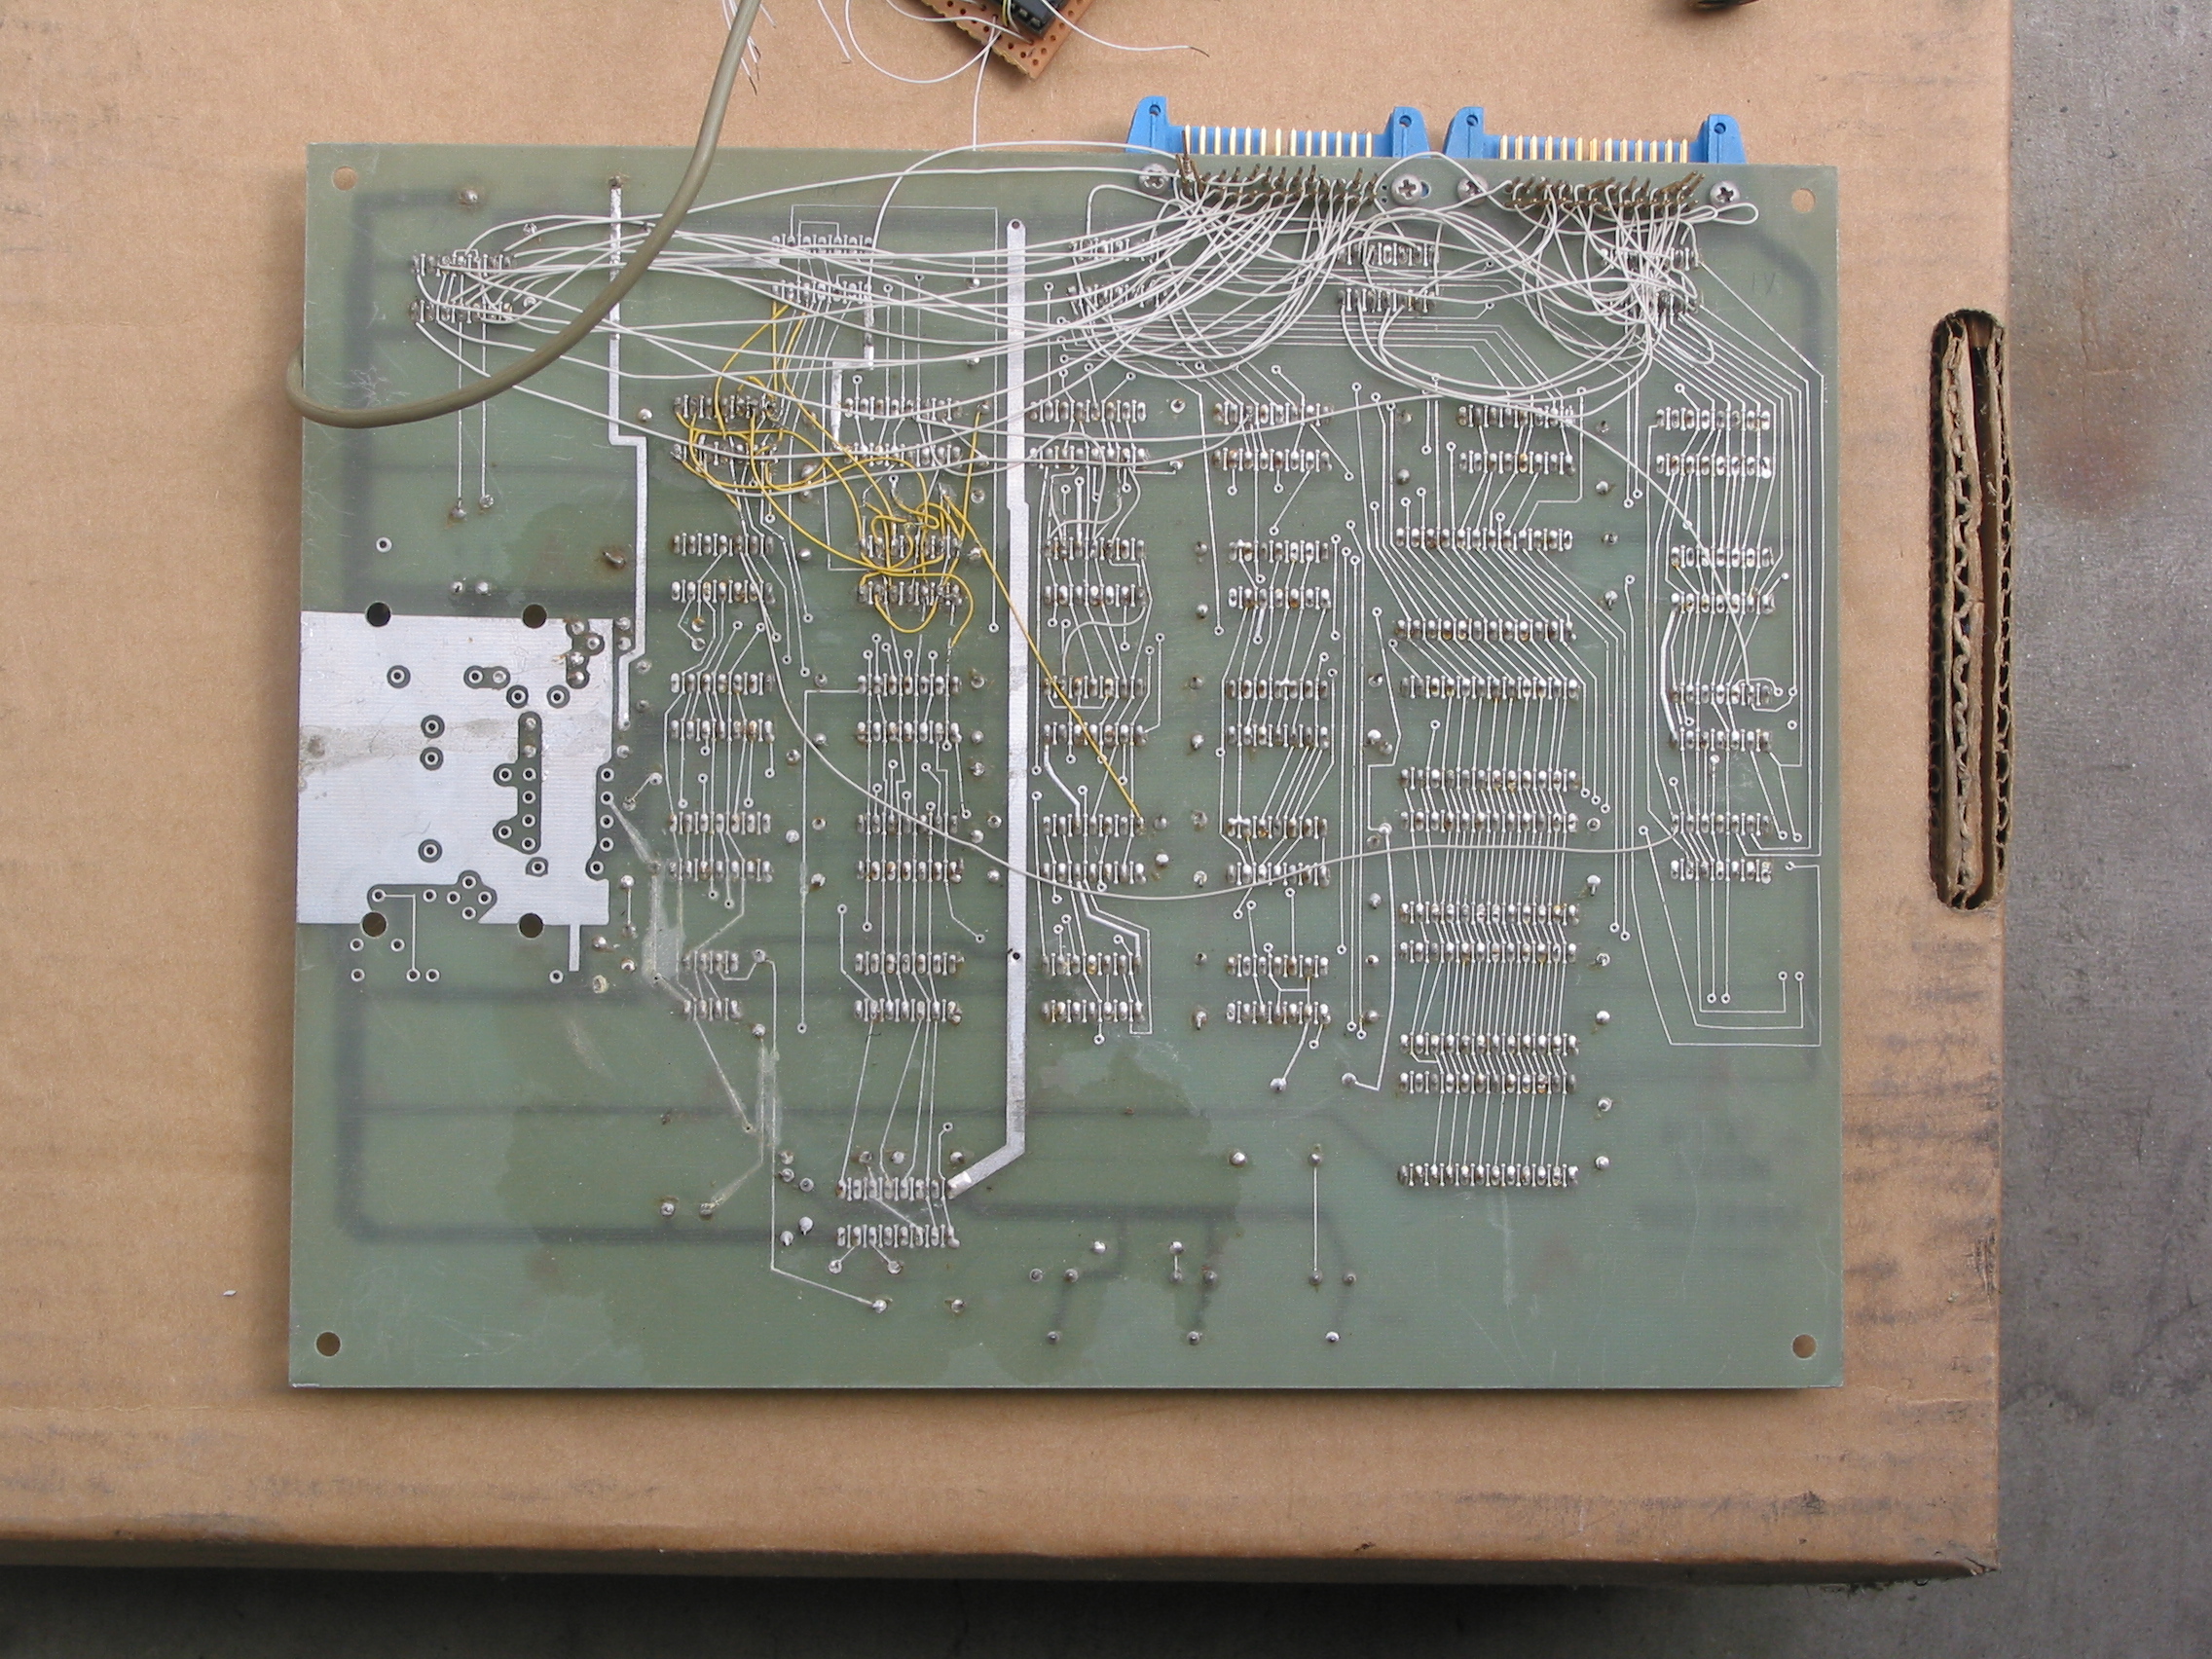 display controller, circuit side